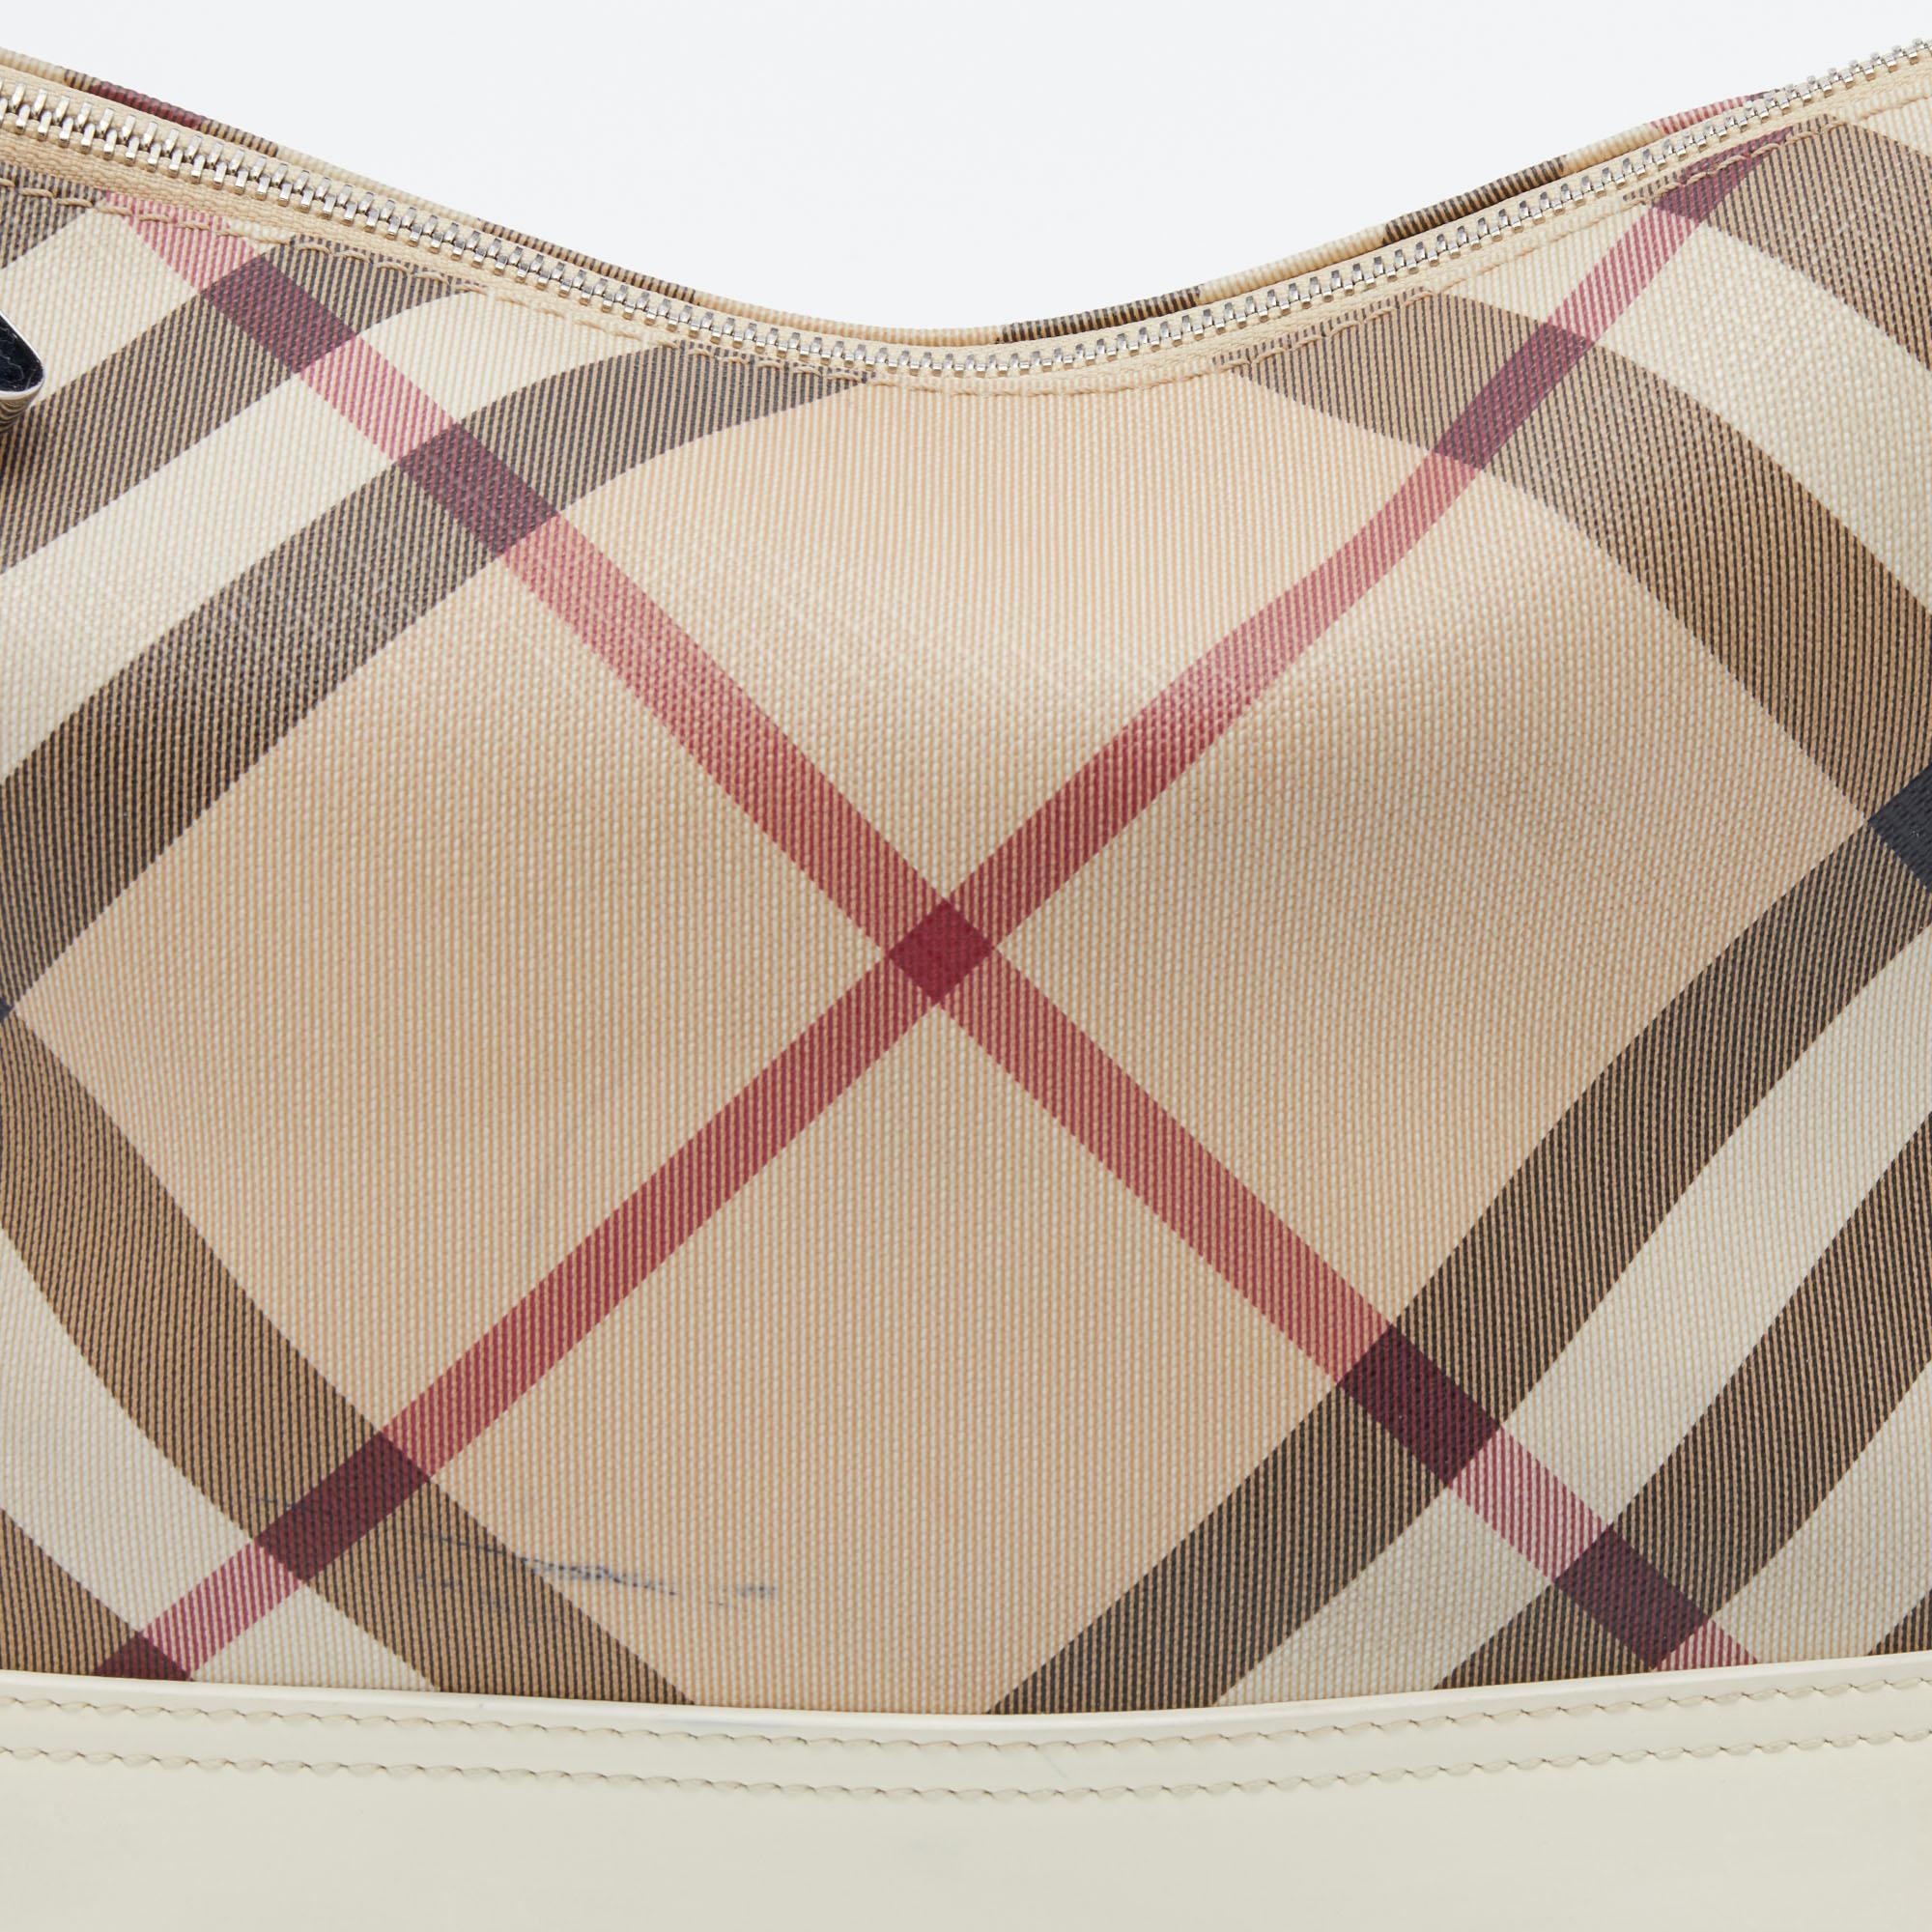 Burberry Beige/Cream Nova Check PVC And Leather Shoulder Bag 2